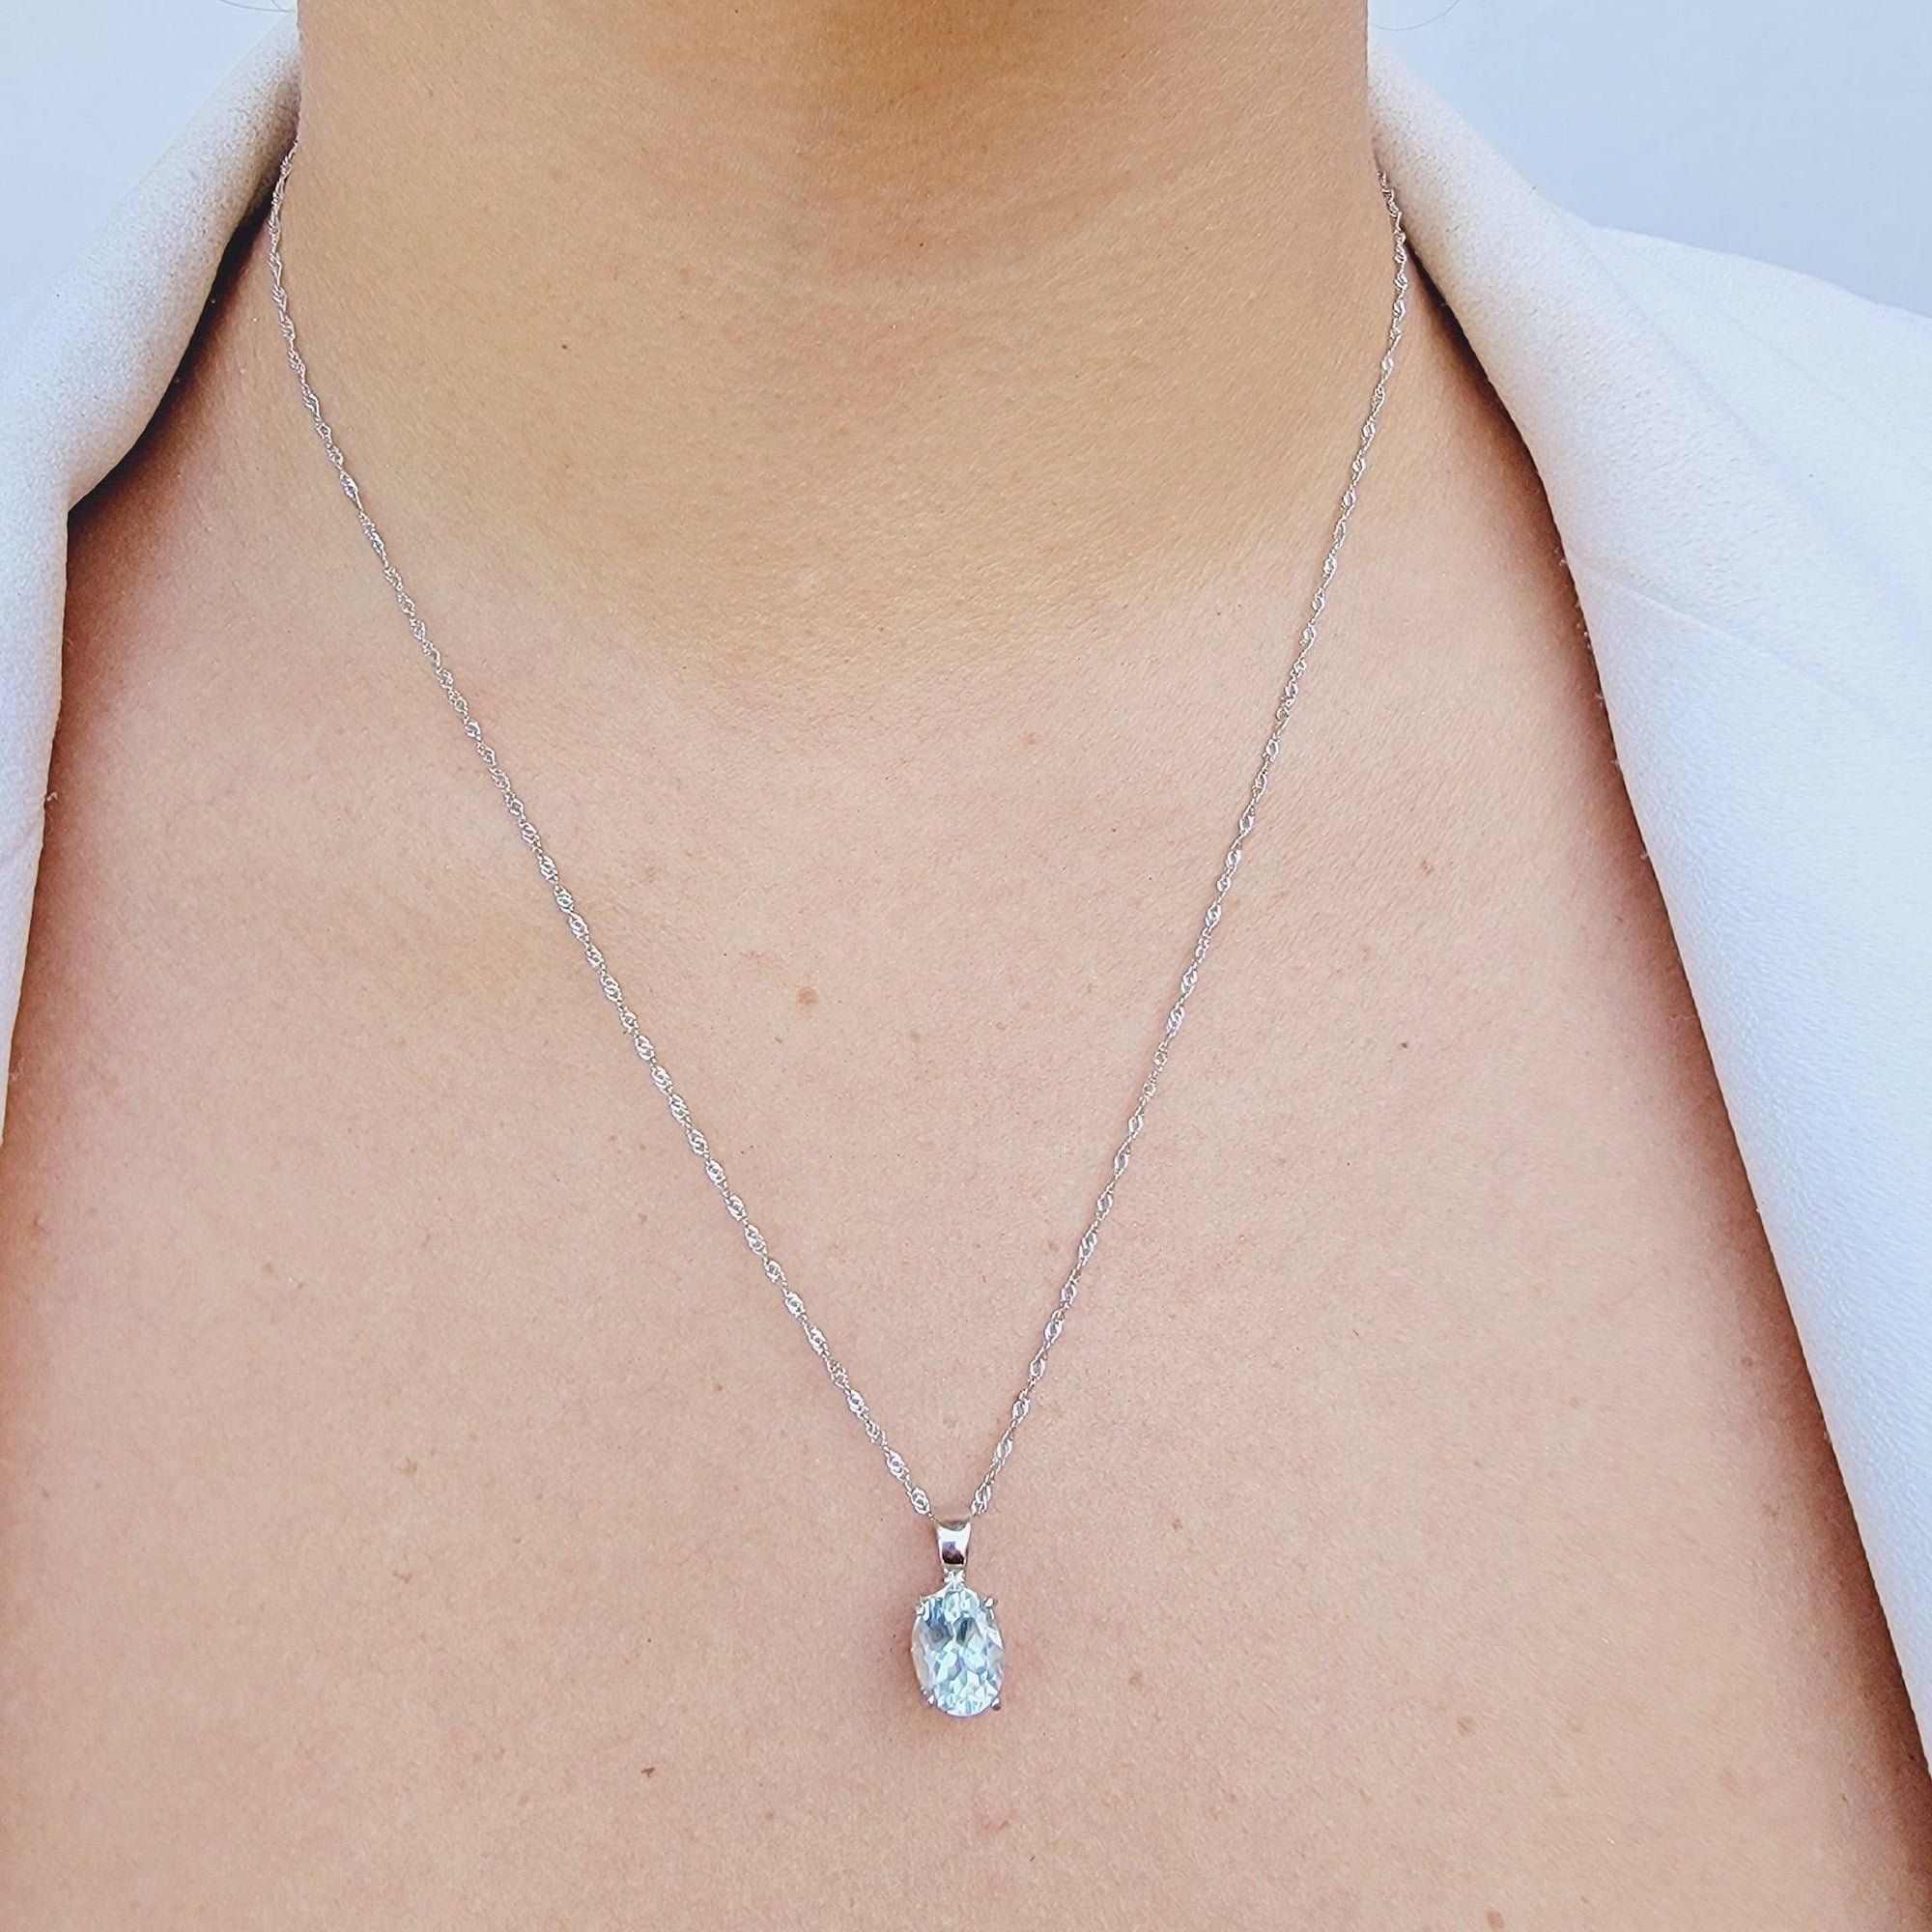 Natural Aquamarine Heart Necklace - Uniquelan Jewelry